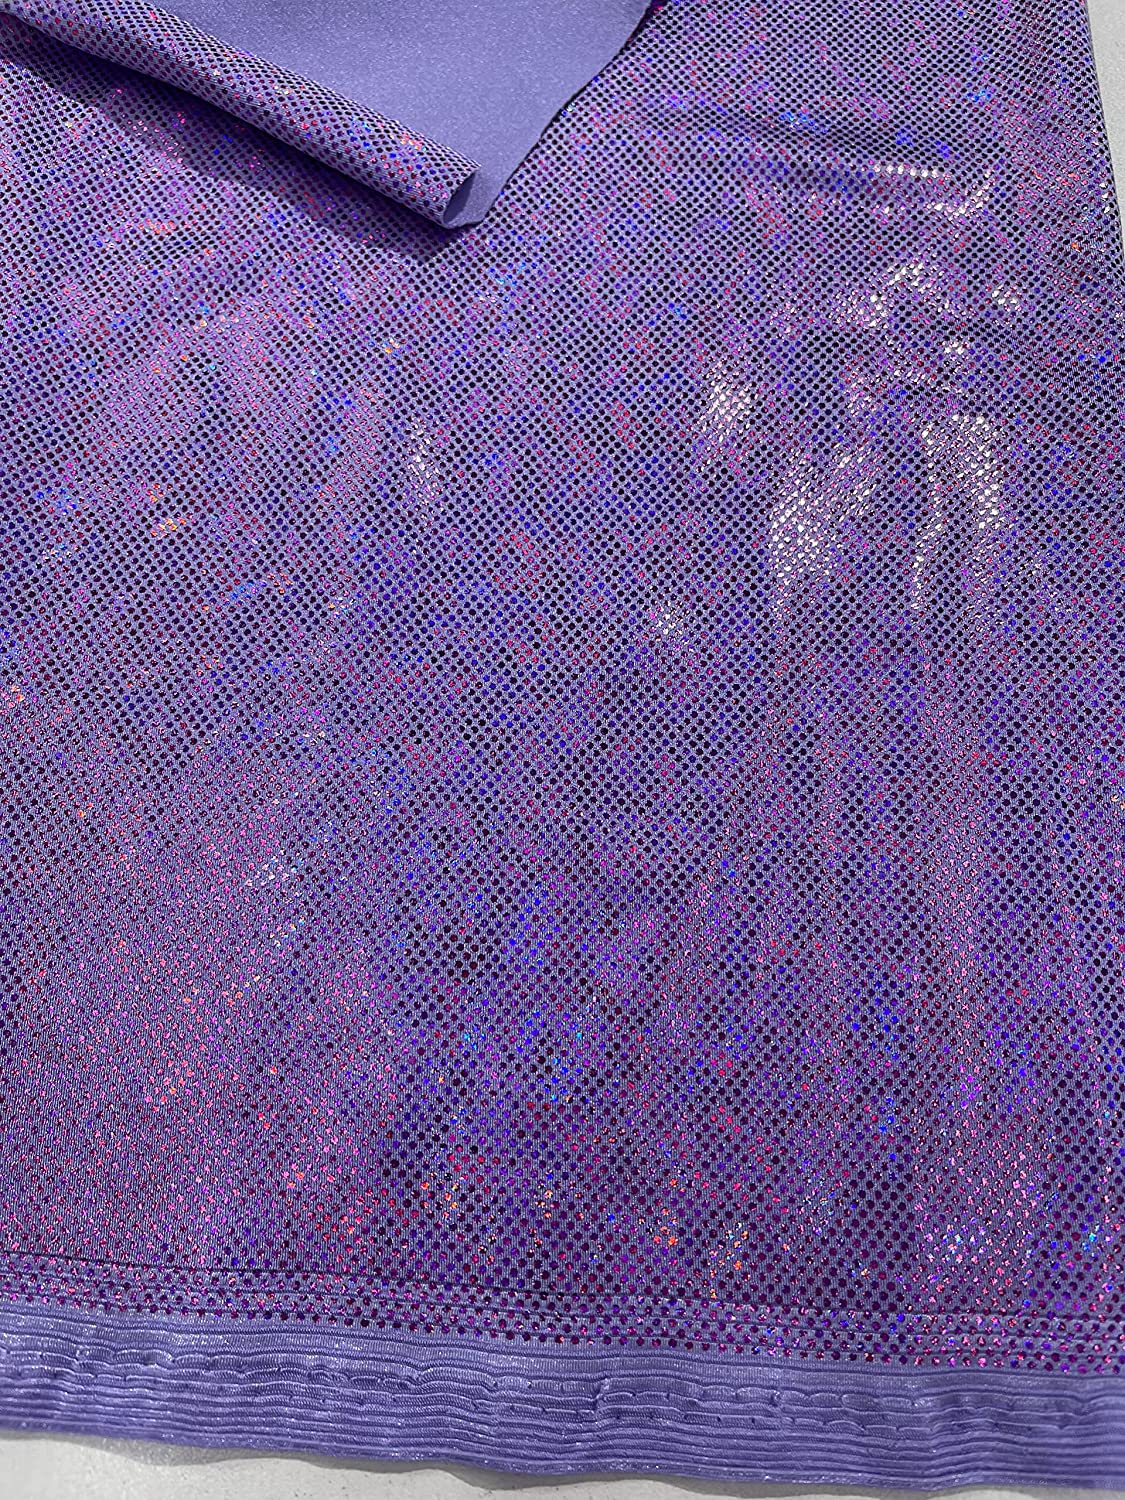 Shattered Glass Foil Iridescent Hologram Dancewear 4 Way Stretch Spandex Nylon Tricot Fabric (1 Yard, Violet)